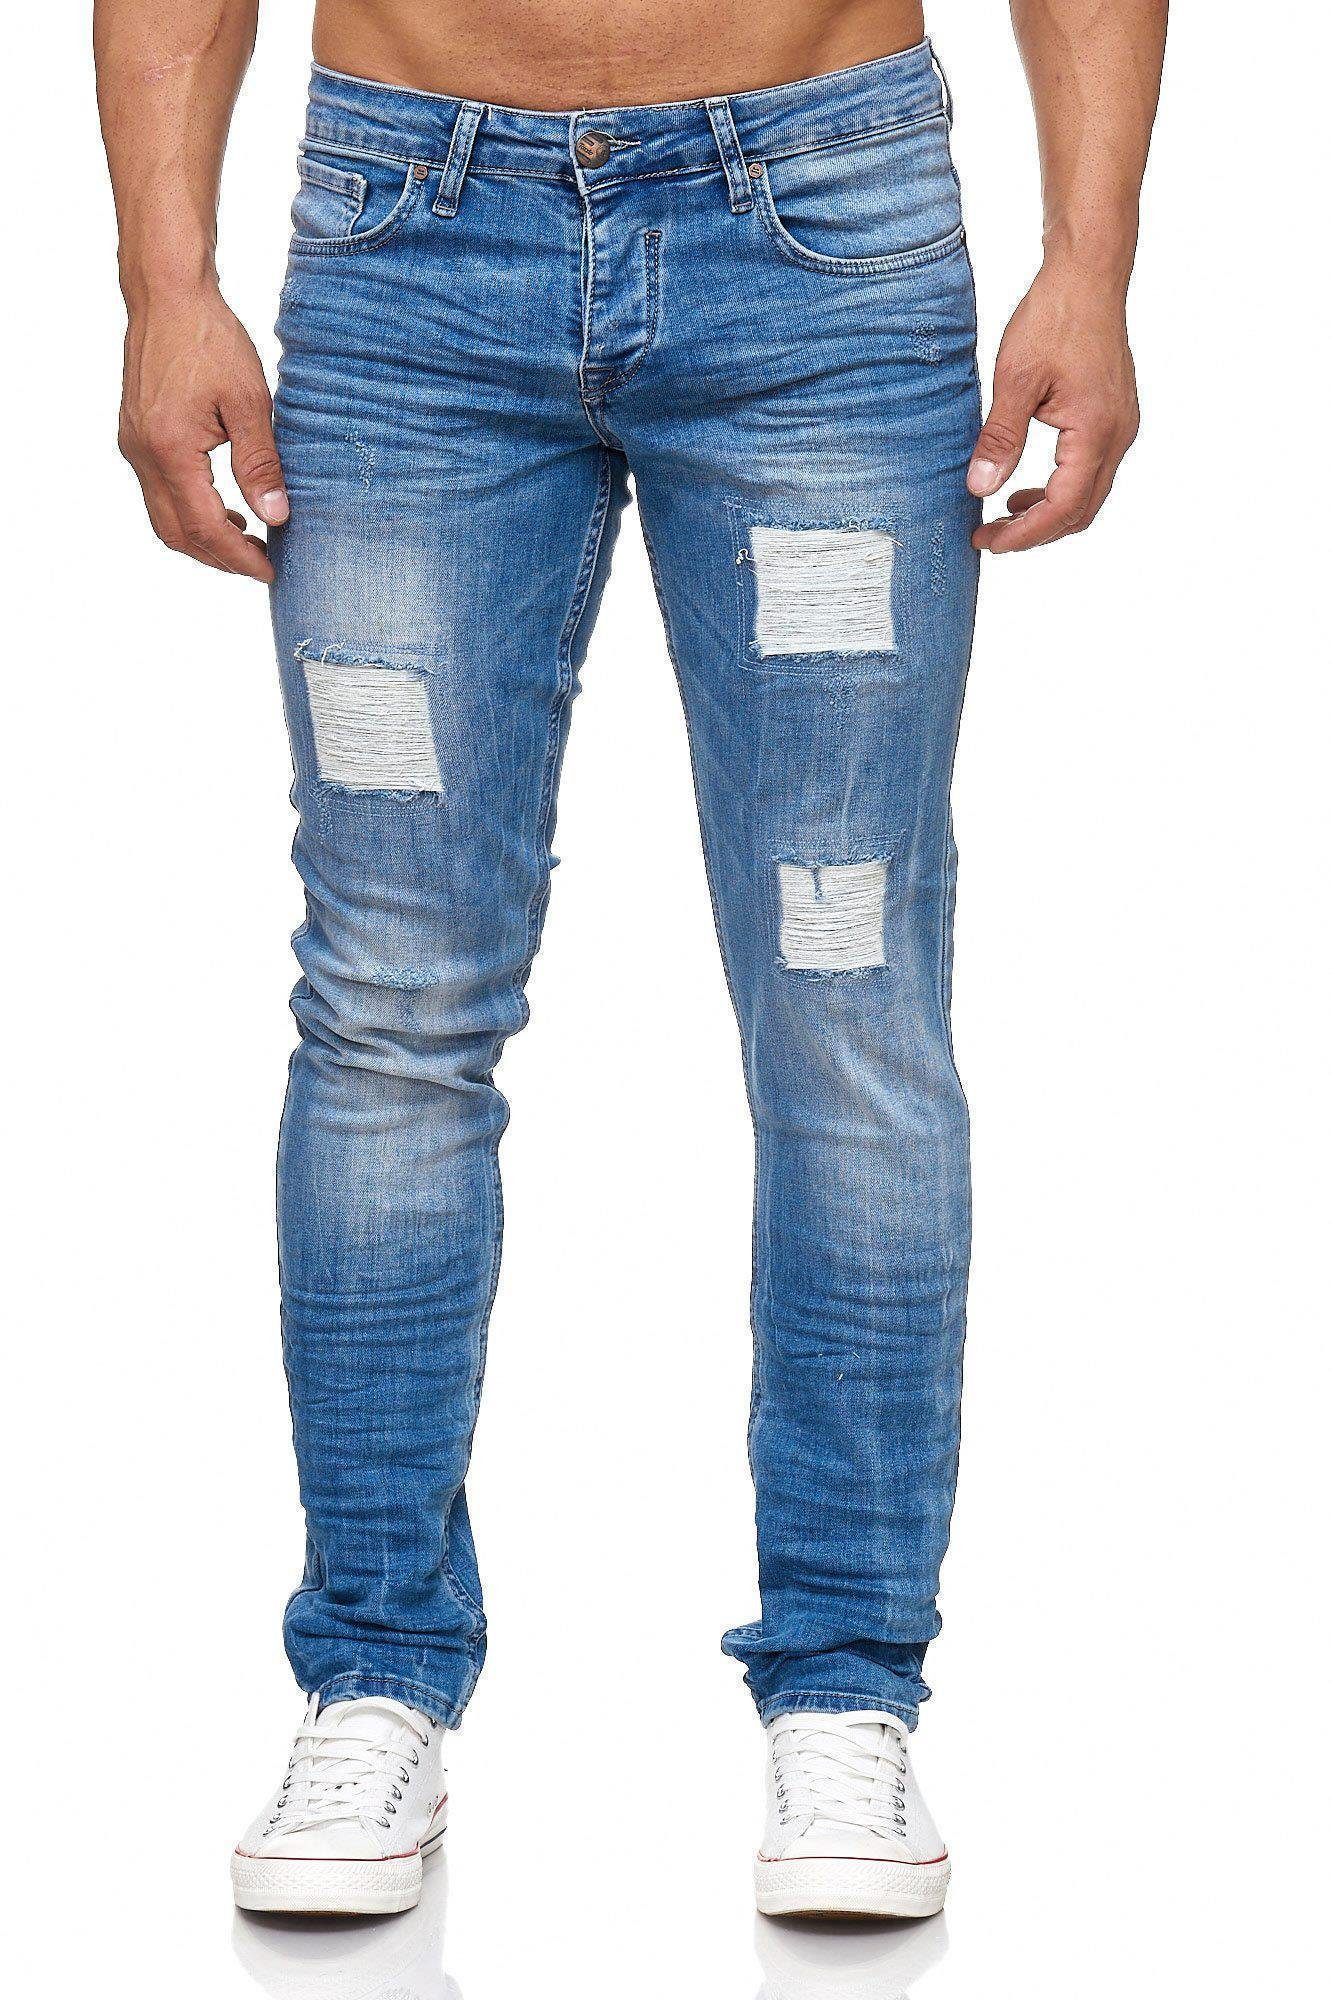 Straight-Jeans im blau Tazzio 17505 Destroyed-Look